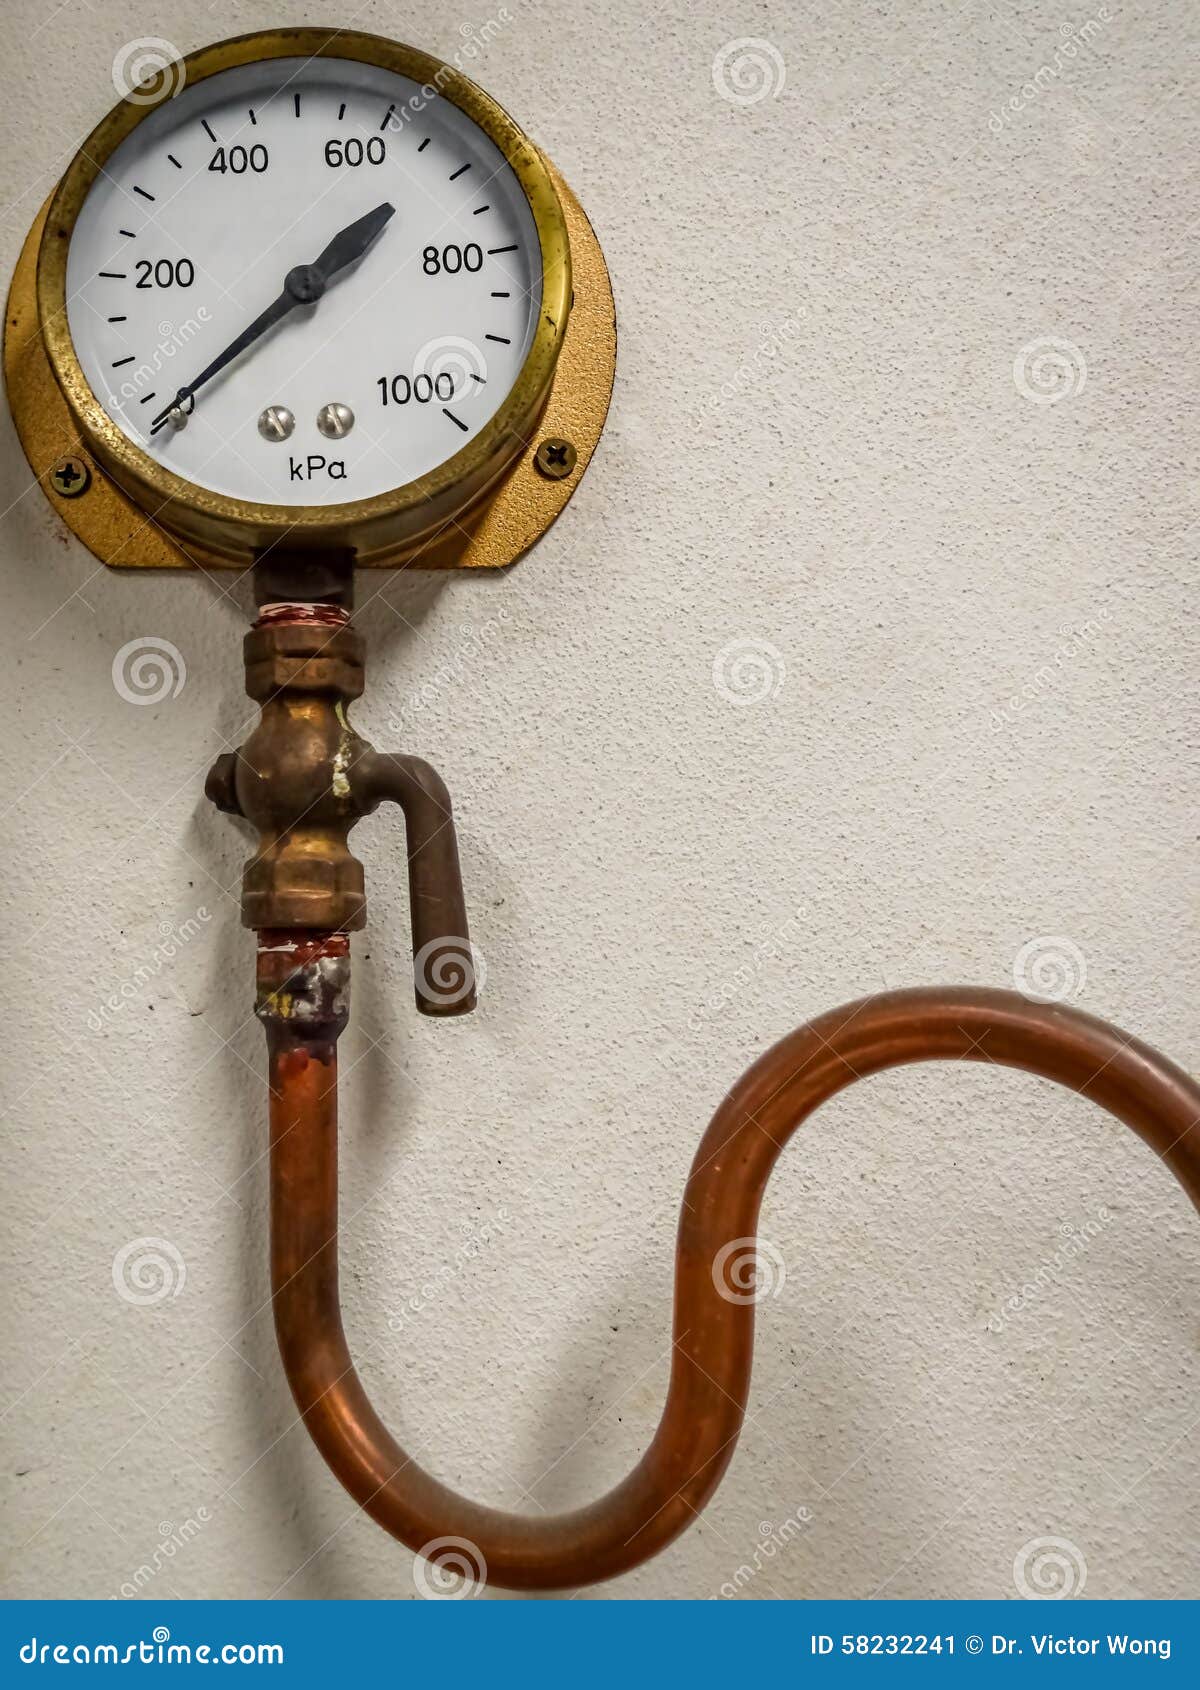 Temperature of pressure steam фото 109